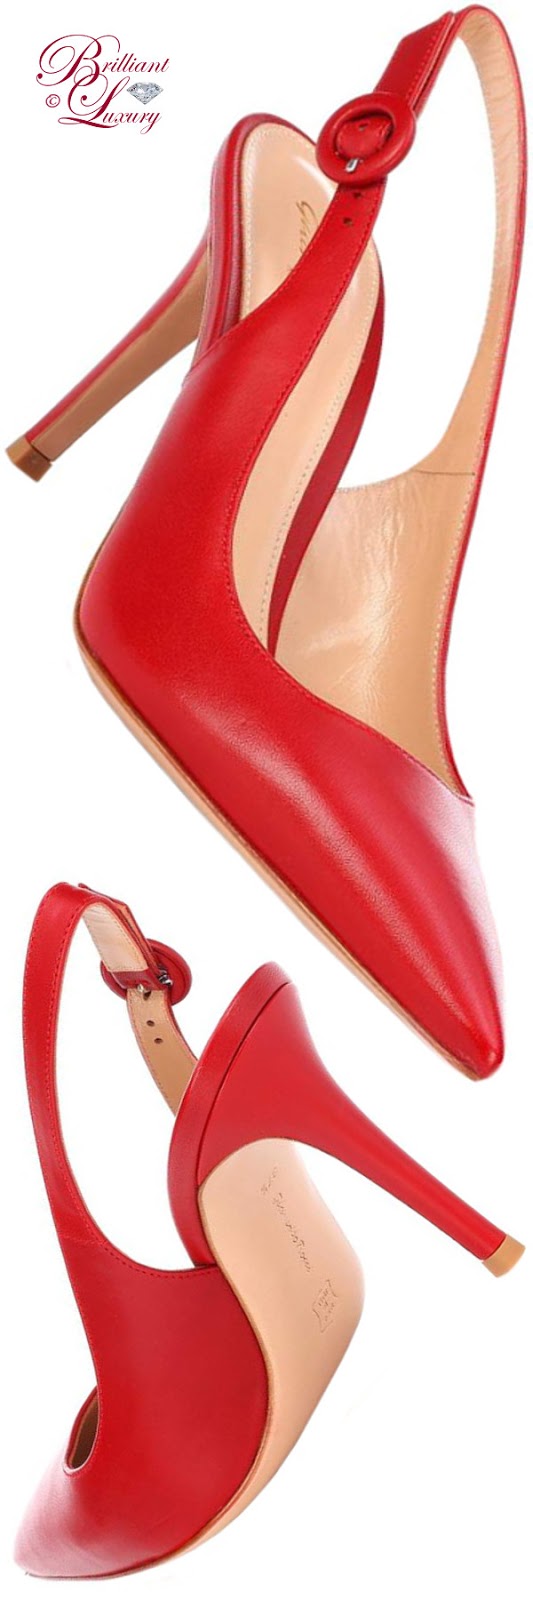 Brilliant Luxury ♦ Gianvito Rossi Anna leather slingback pumps in #red